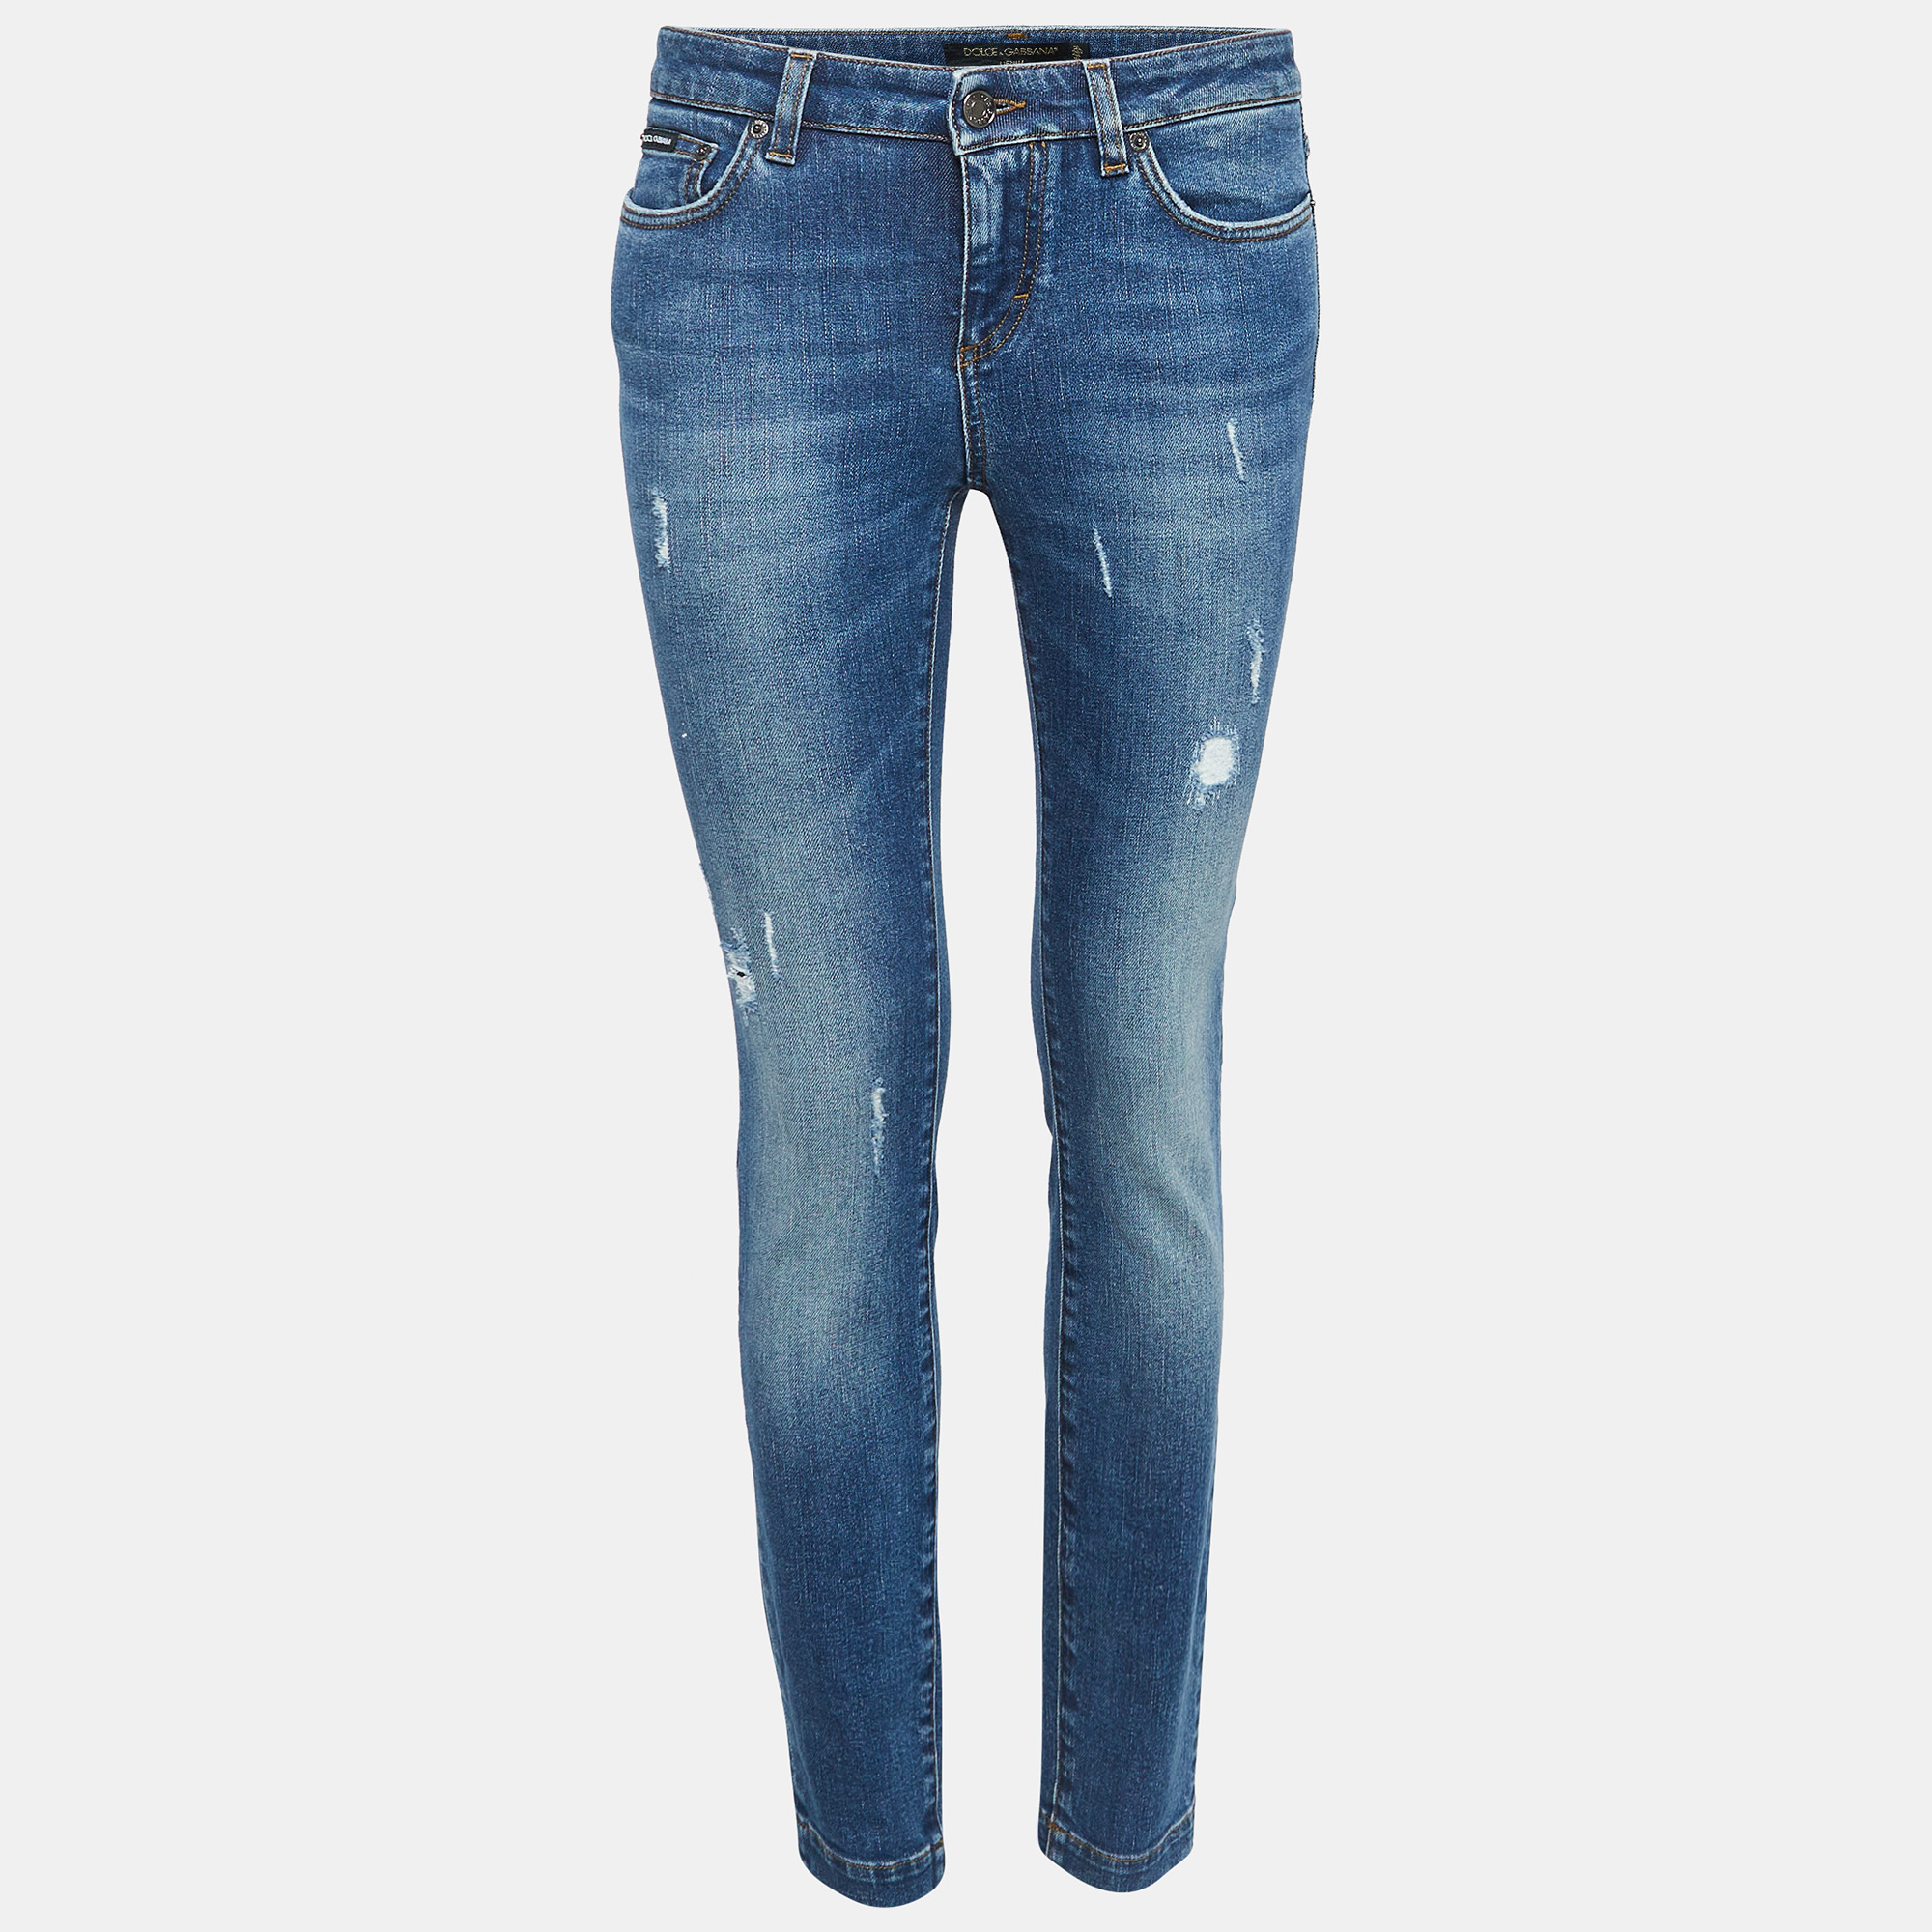 Dolce & gabbana blue distressed denim jeans s waist 28"